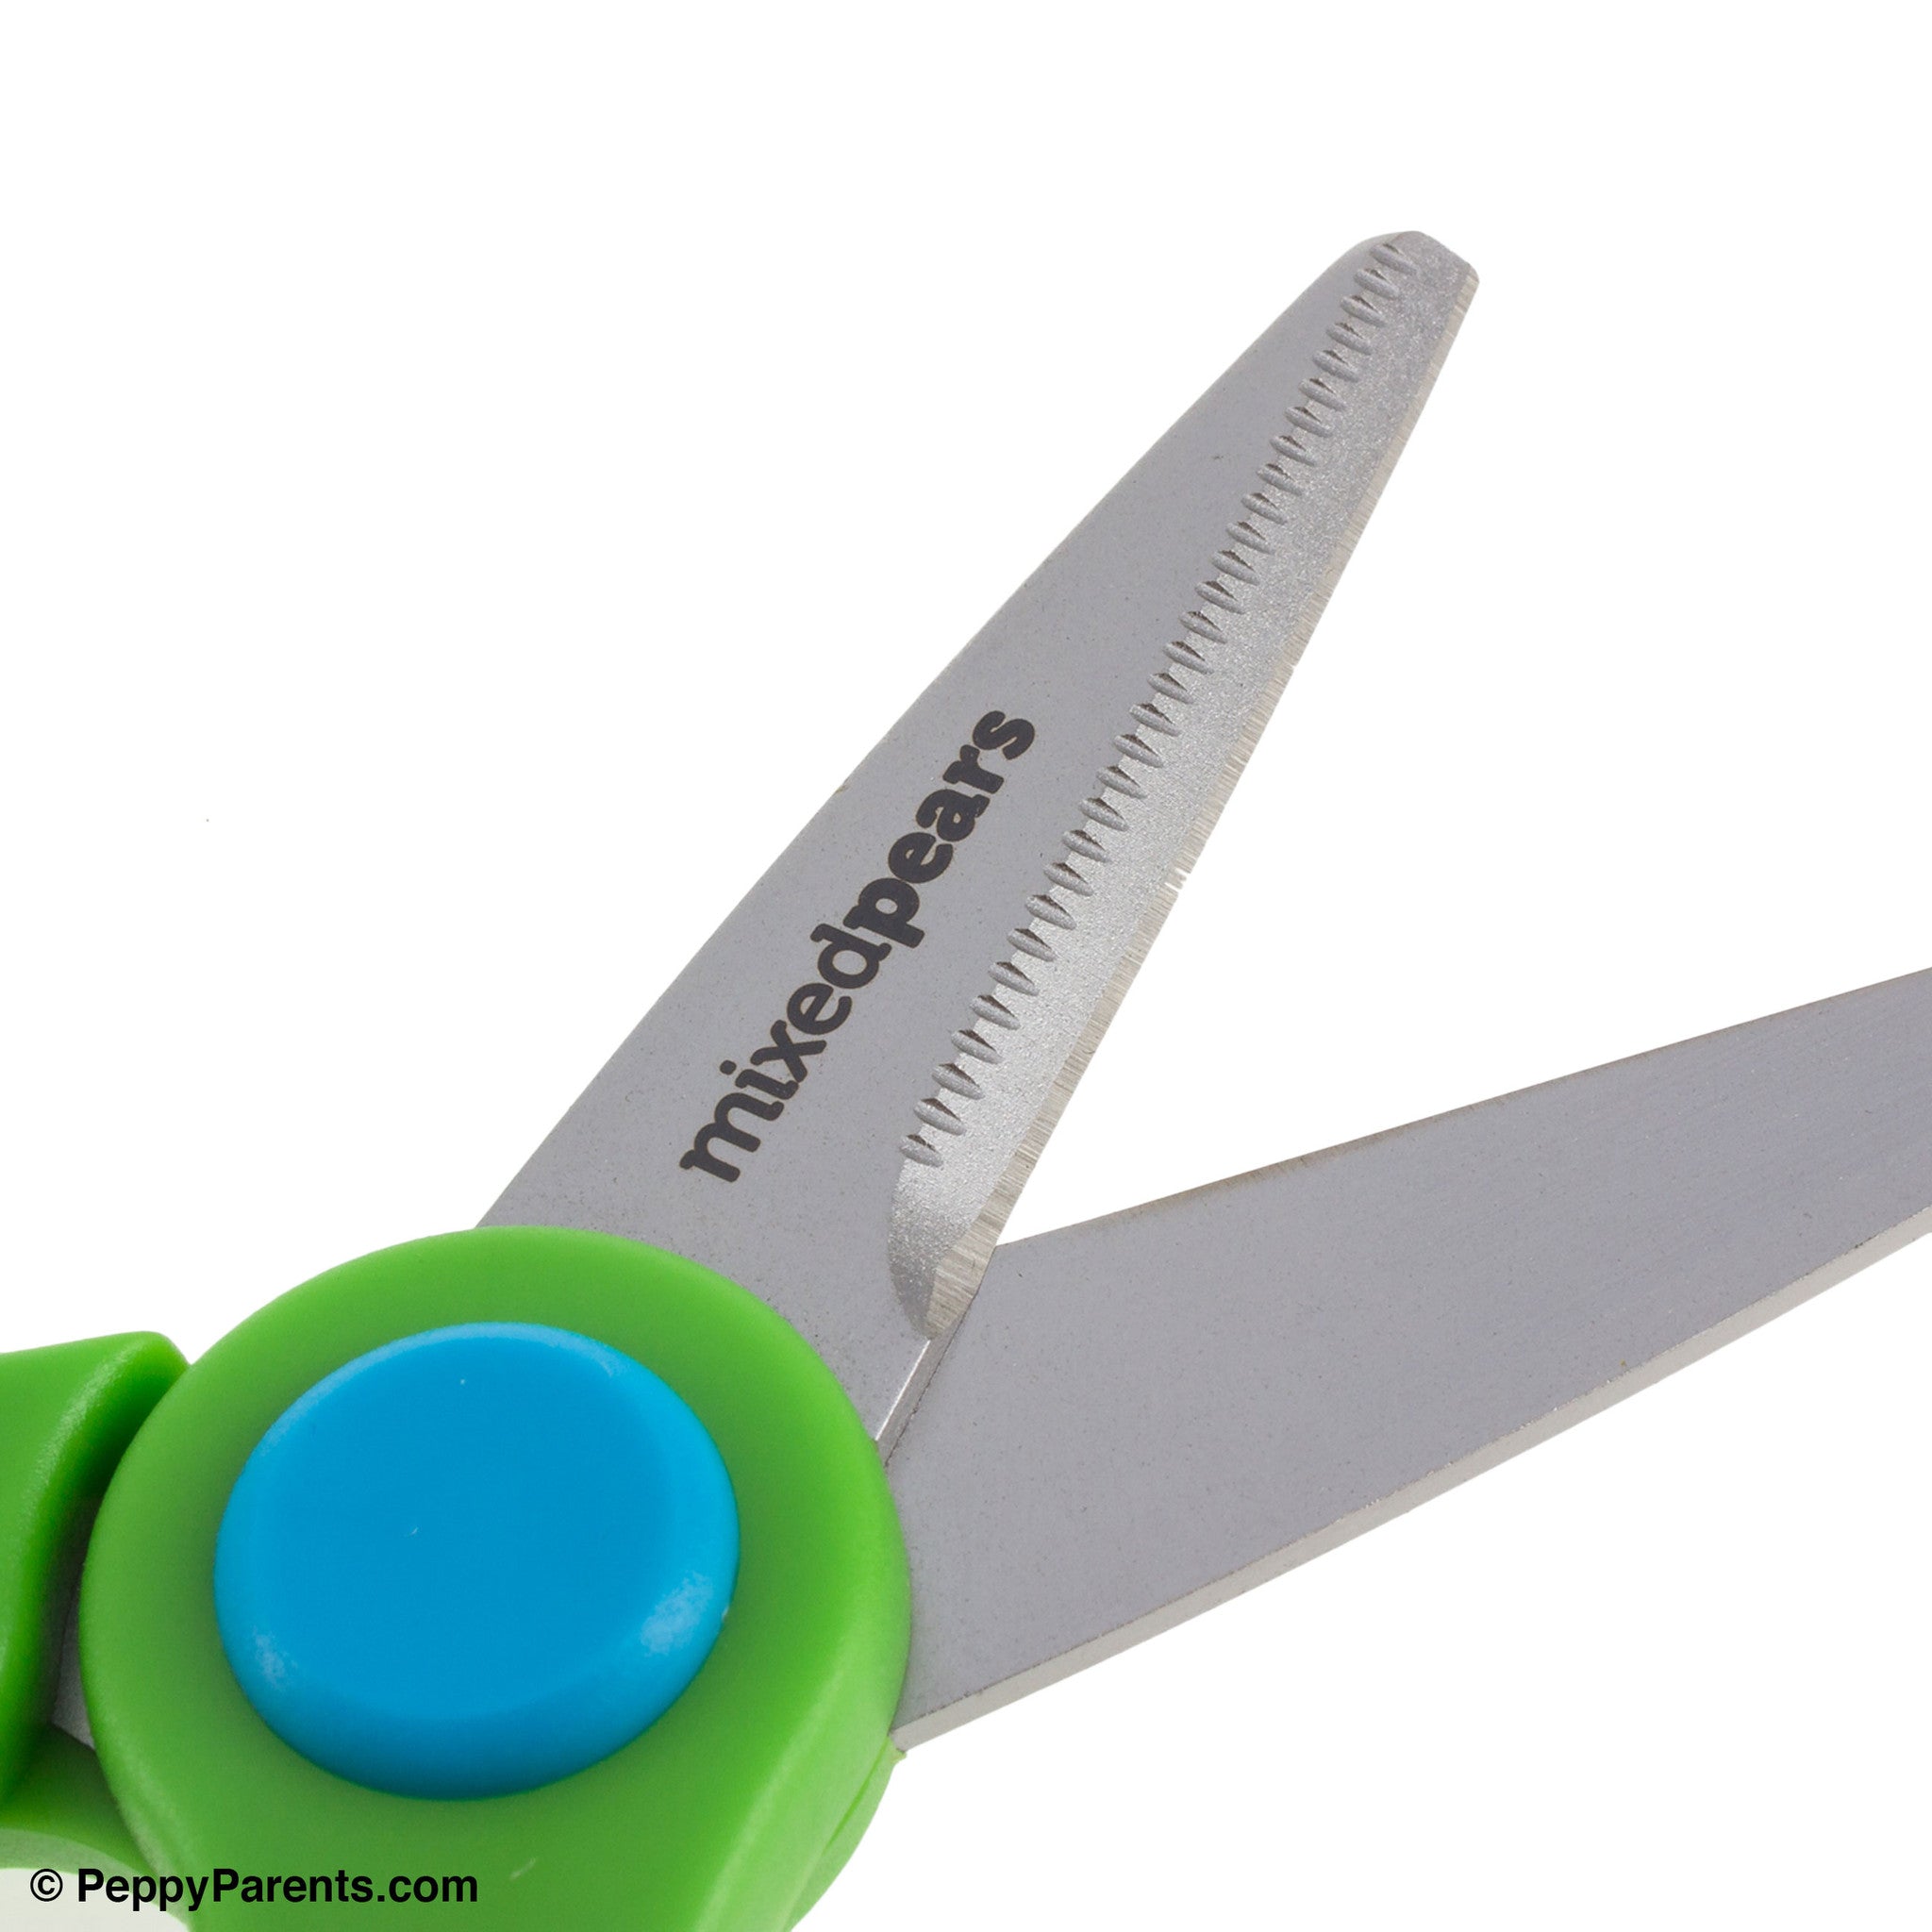 BiteSizers Portable Food Scissors 